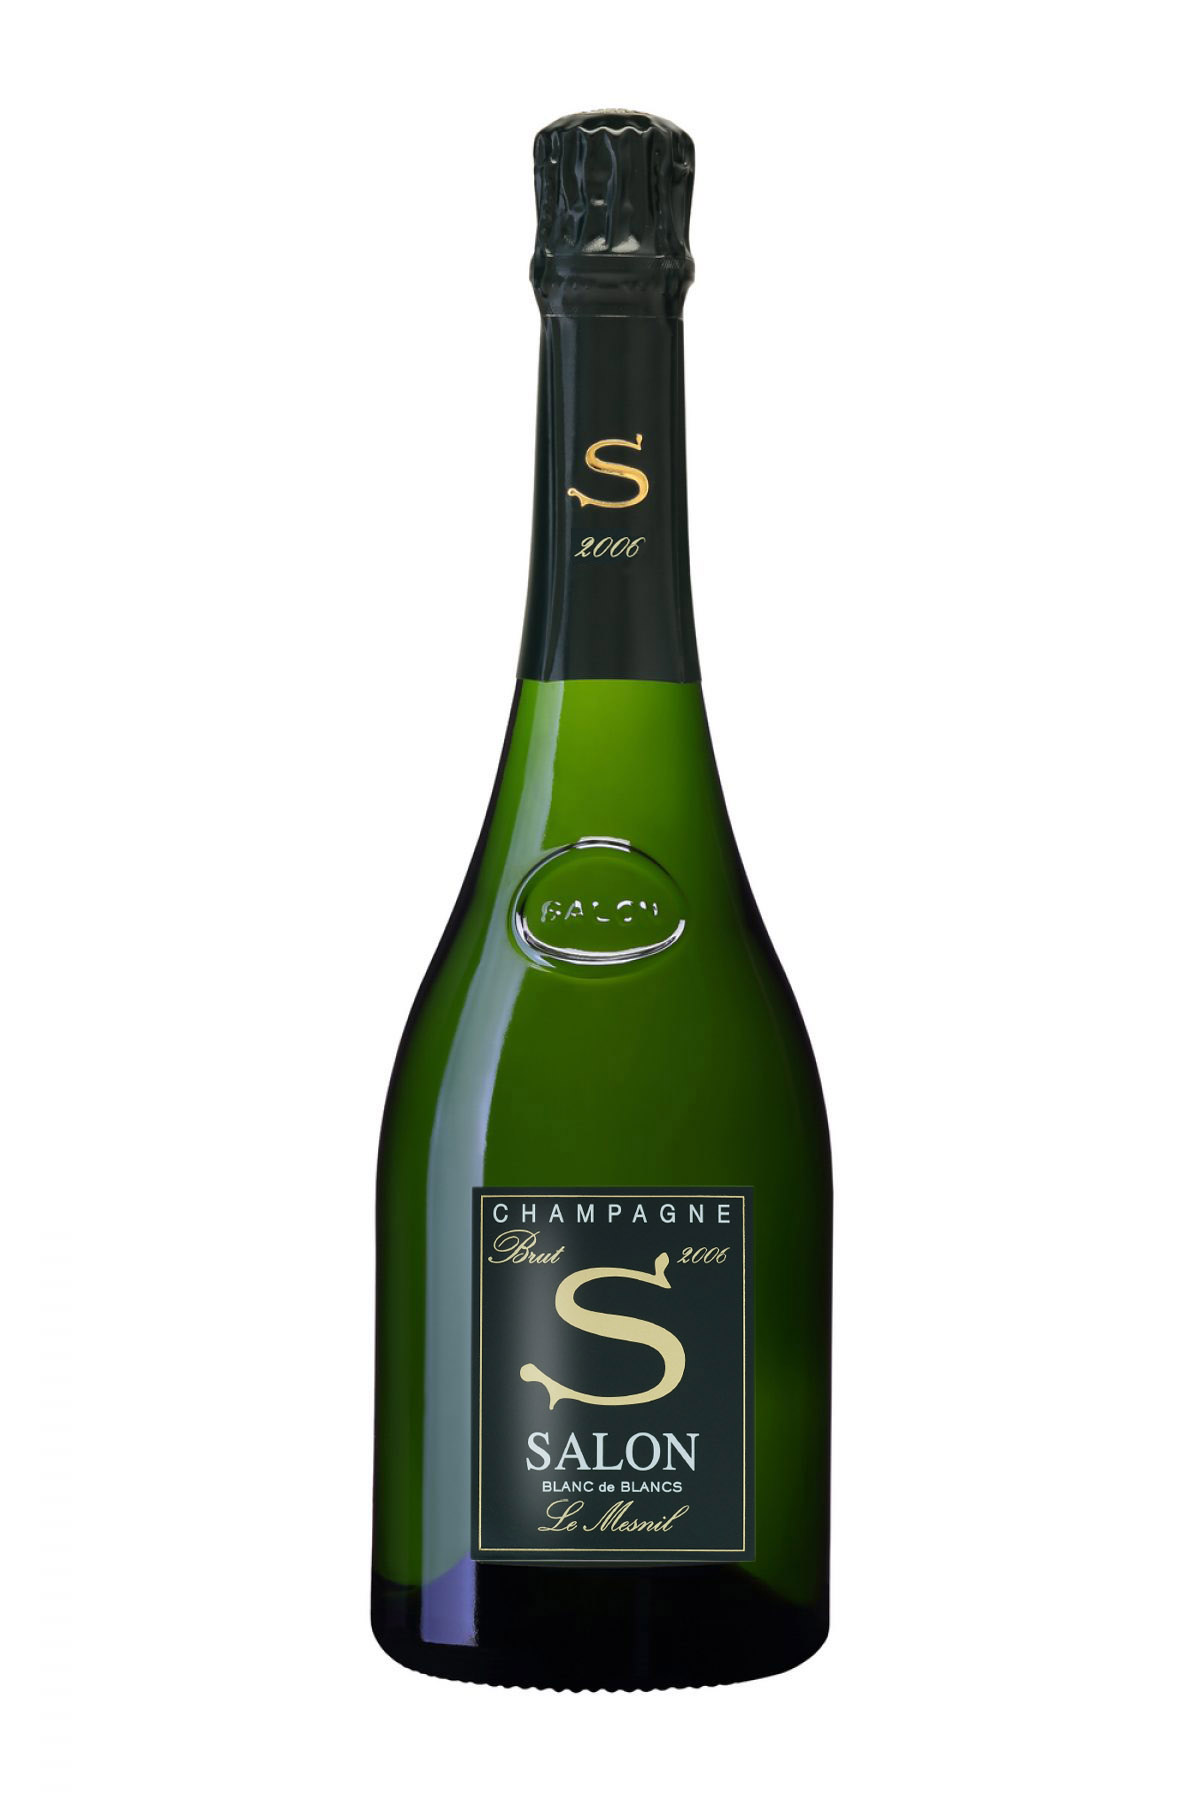 Champagne S de Salon 2006